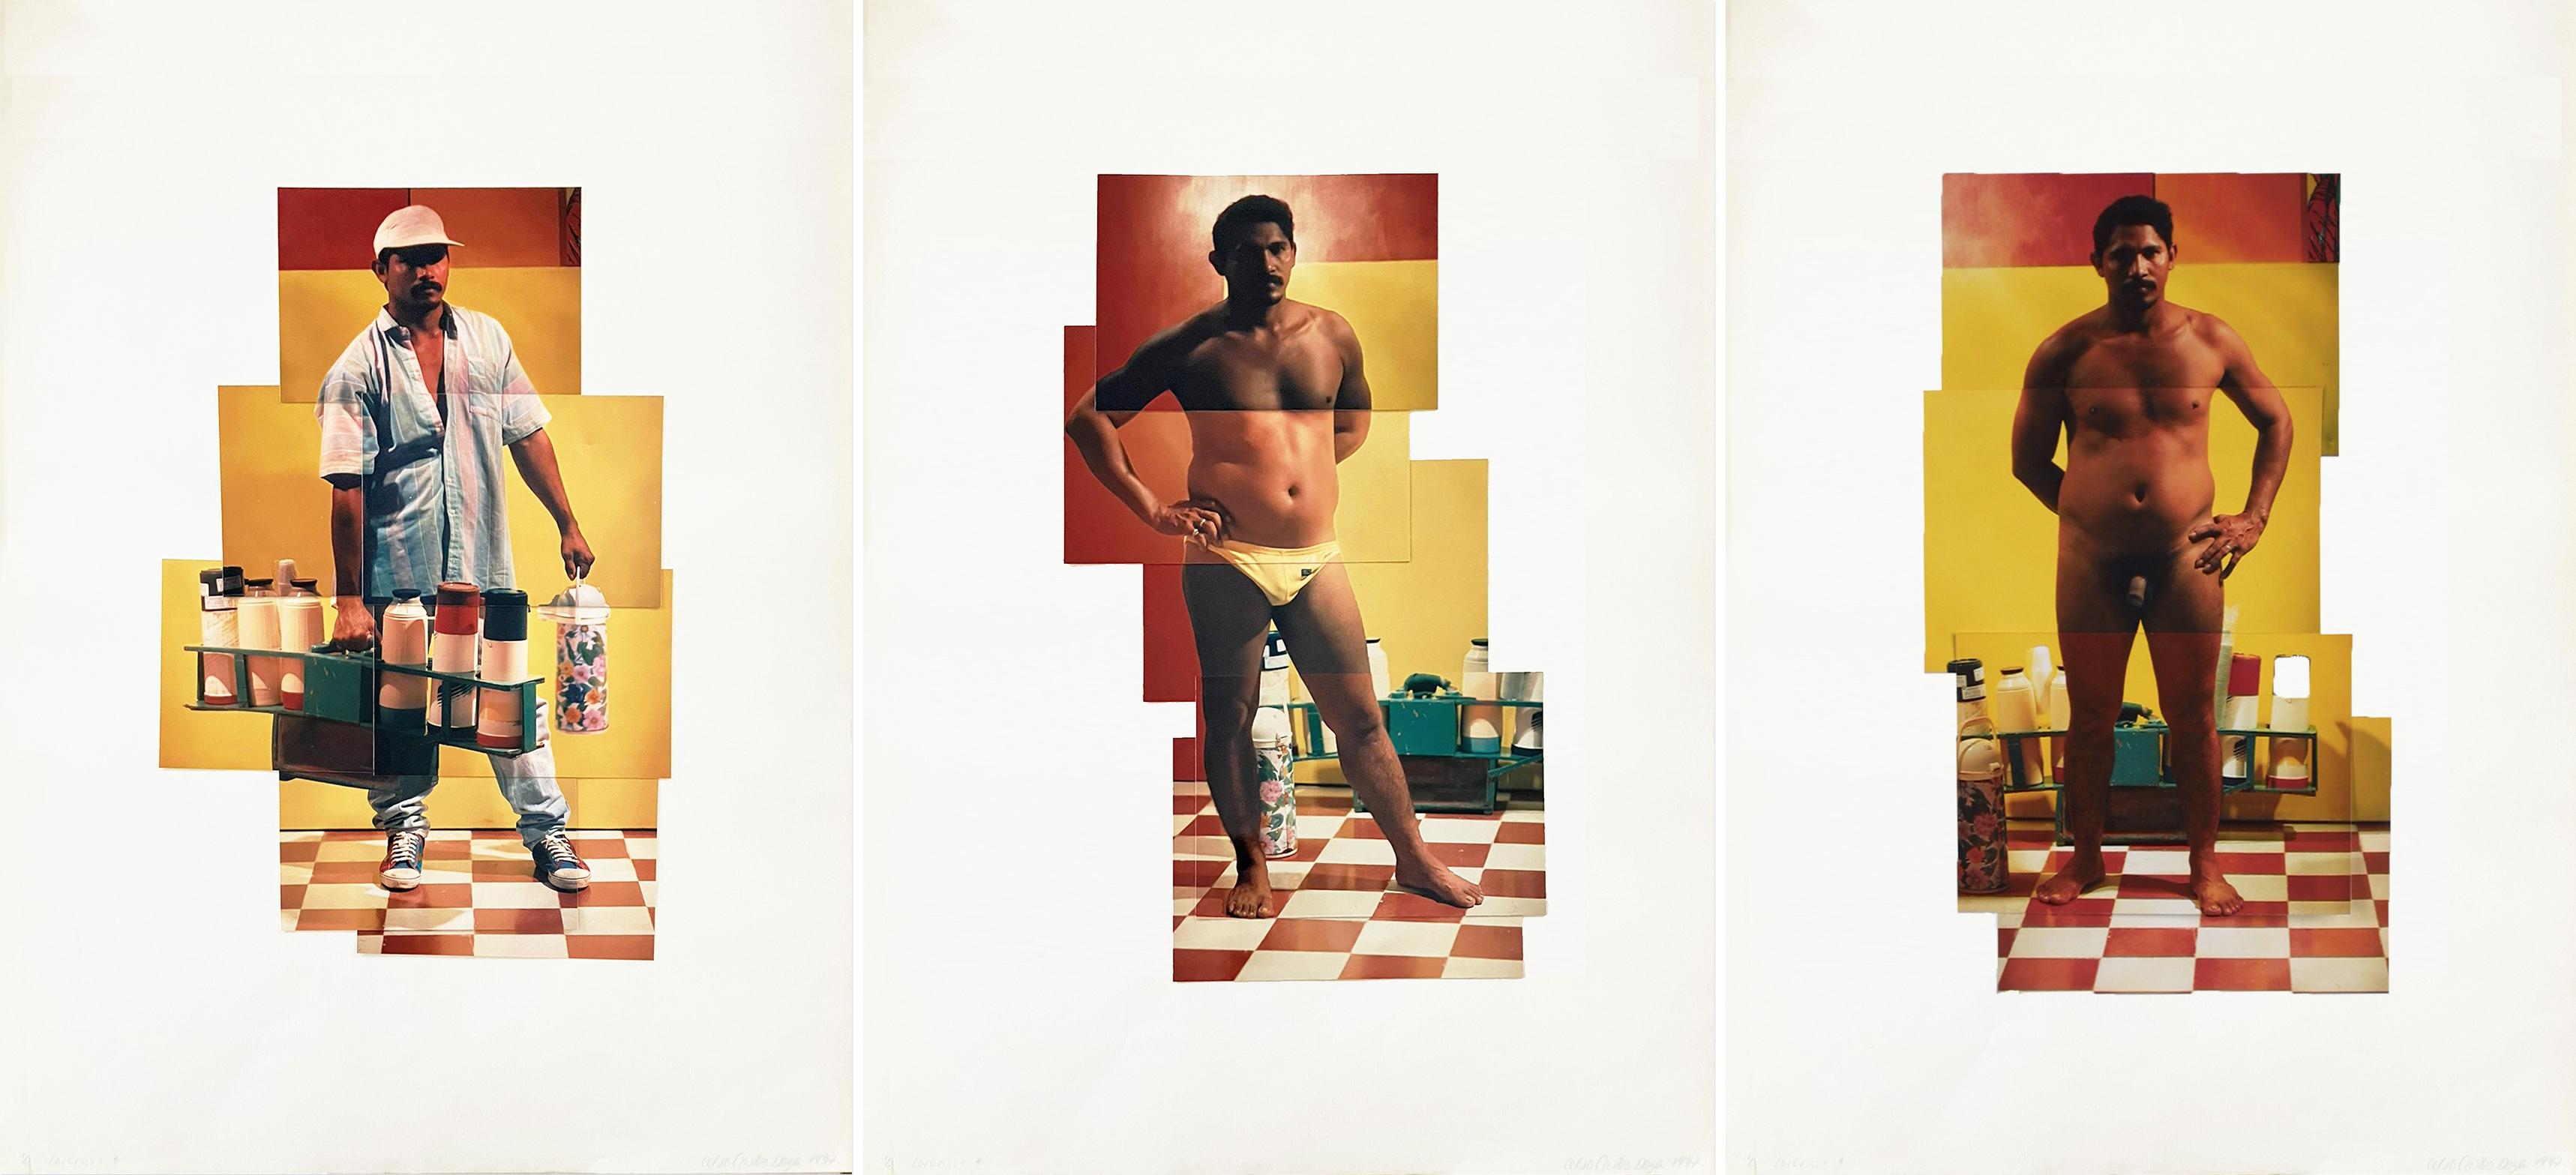 Nude Photograph Celso José Castro Daza - Triptyque de Lorenzo. De la série The Vendedores, Collage de photos 